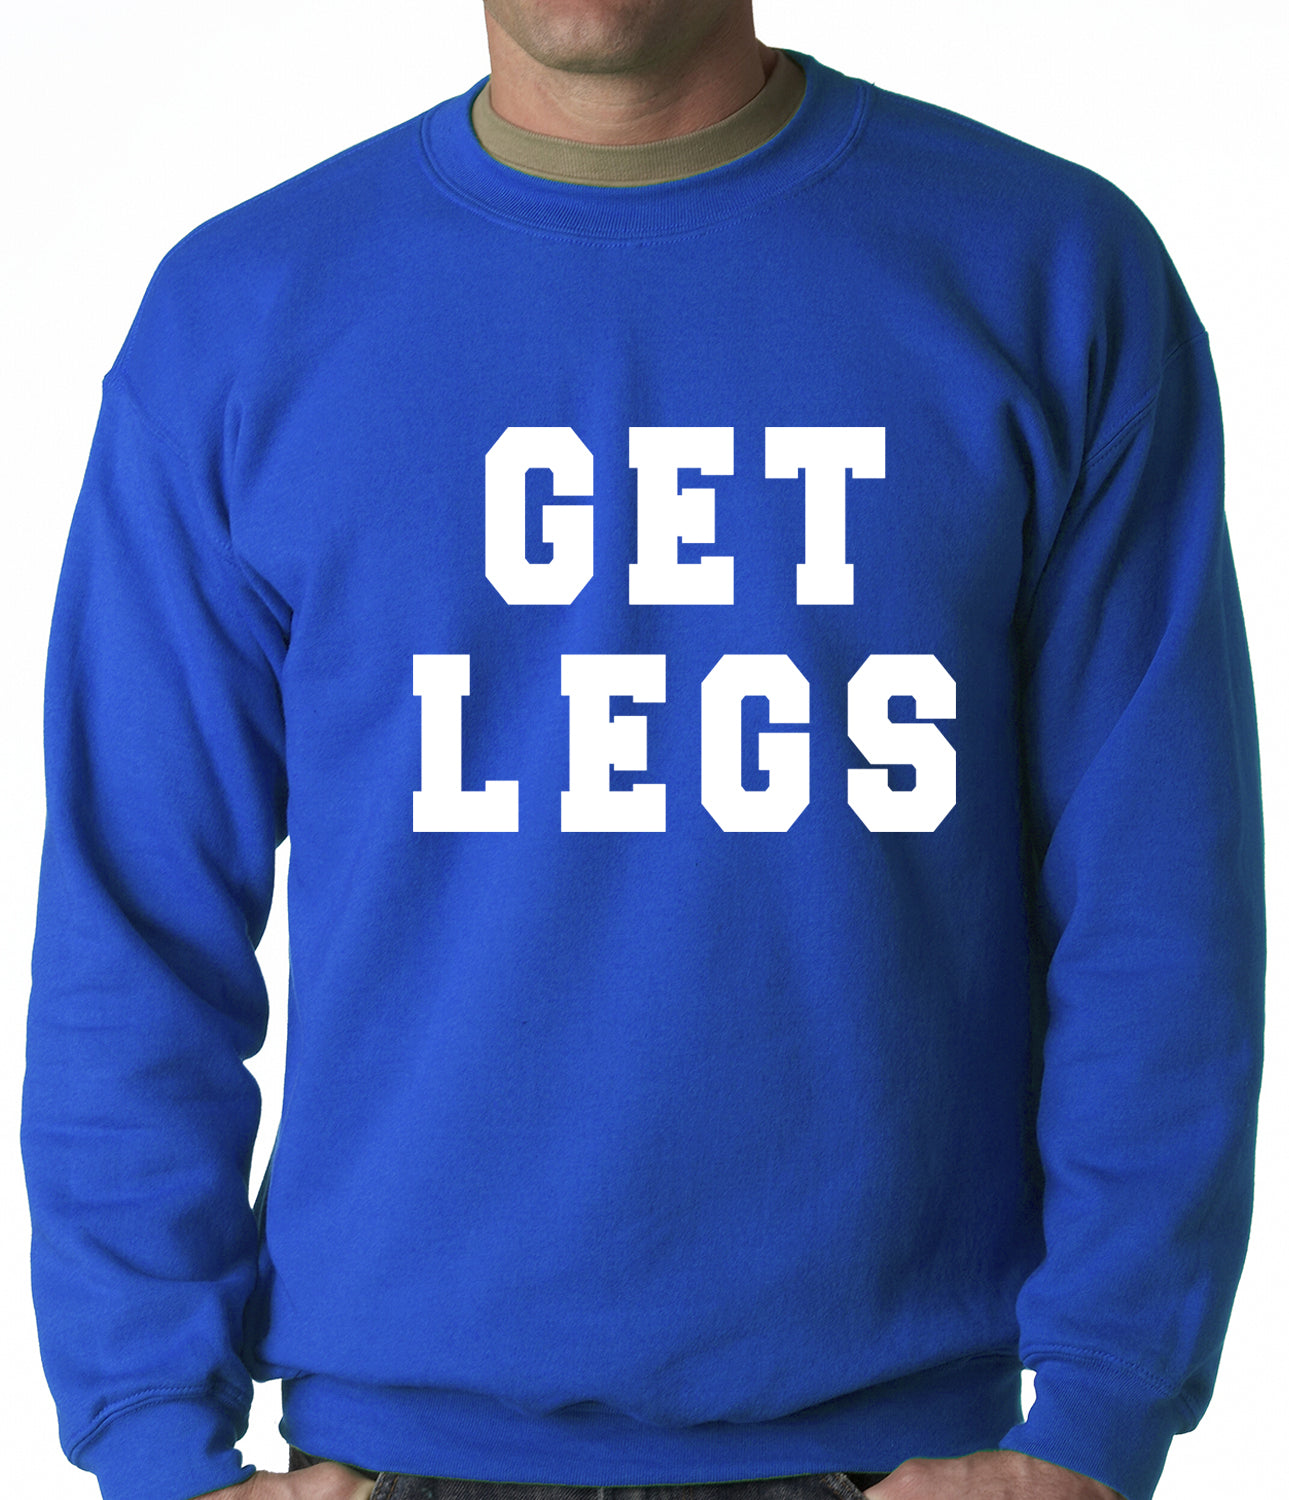 Get Legs Adult Crewneck Sweatshirt